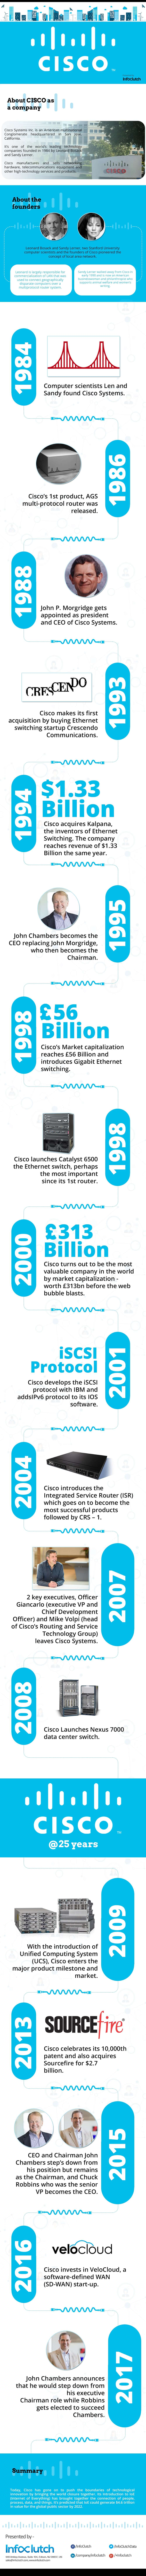 Success Story of Cisco Achievements & Milestones